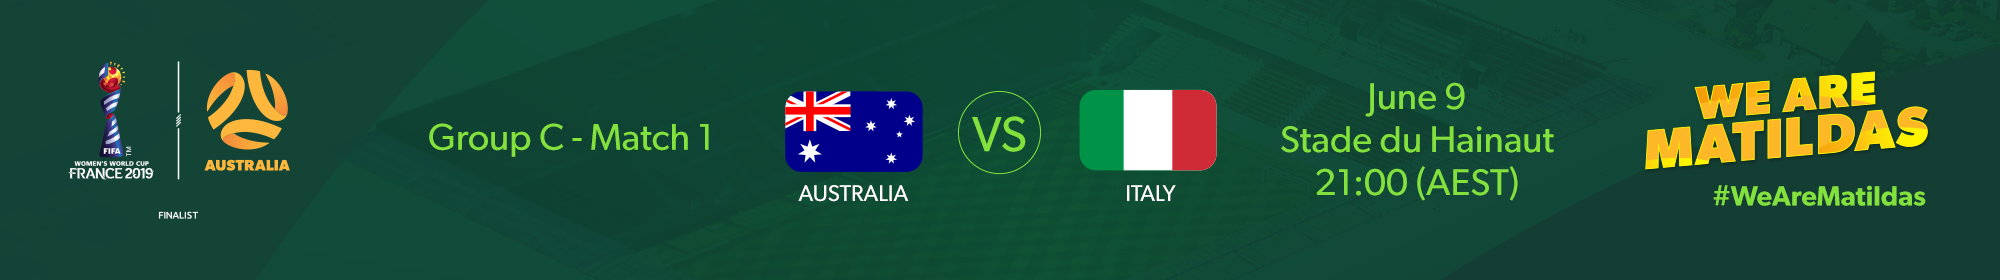 Matildas v Italy Fixture